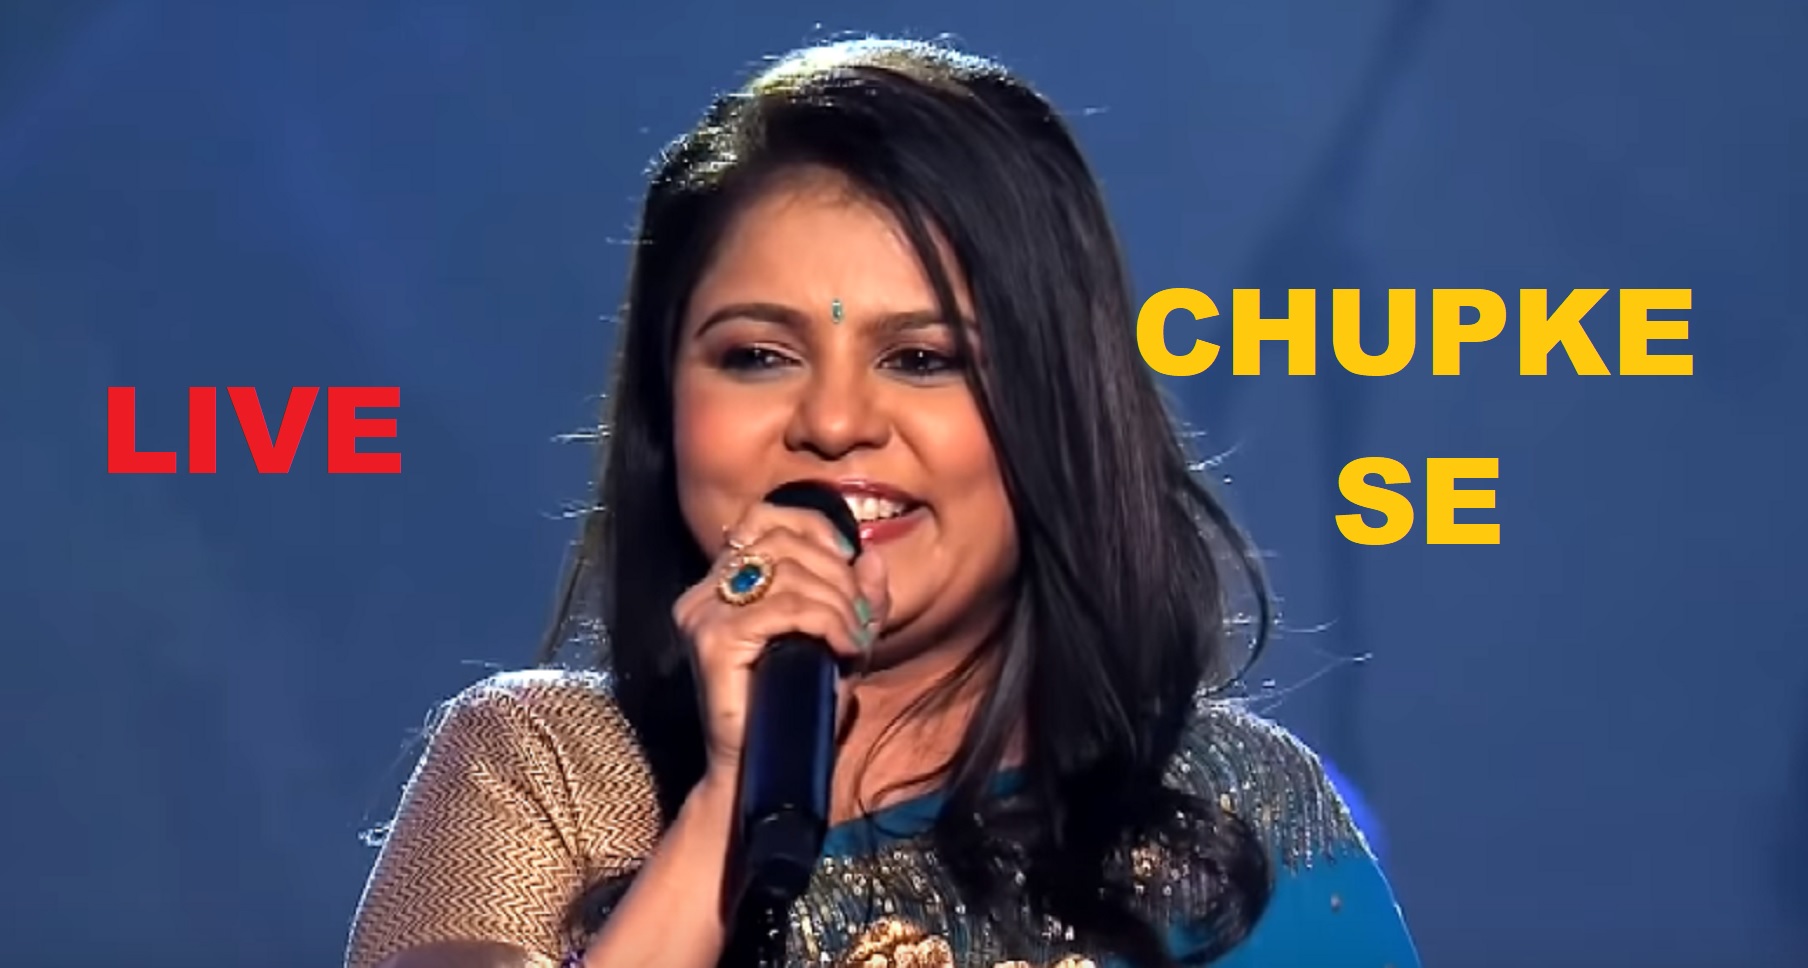 Watch: When Sadhna Sargam Beautifully Sang ‘Chupke Se’ Live In Tribute To A. R. Rahman [Video]